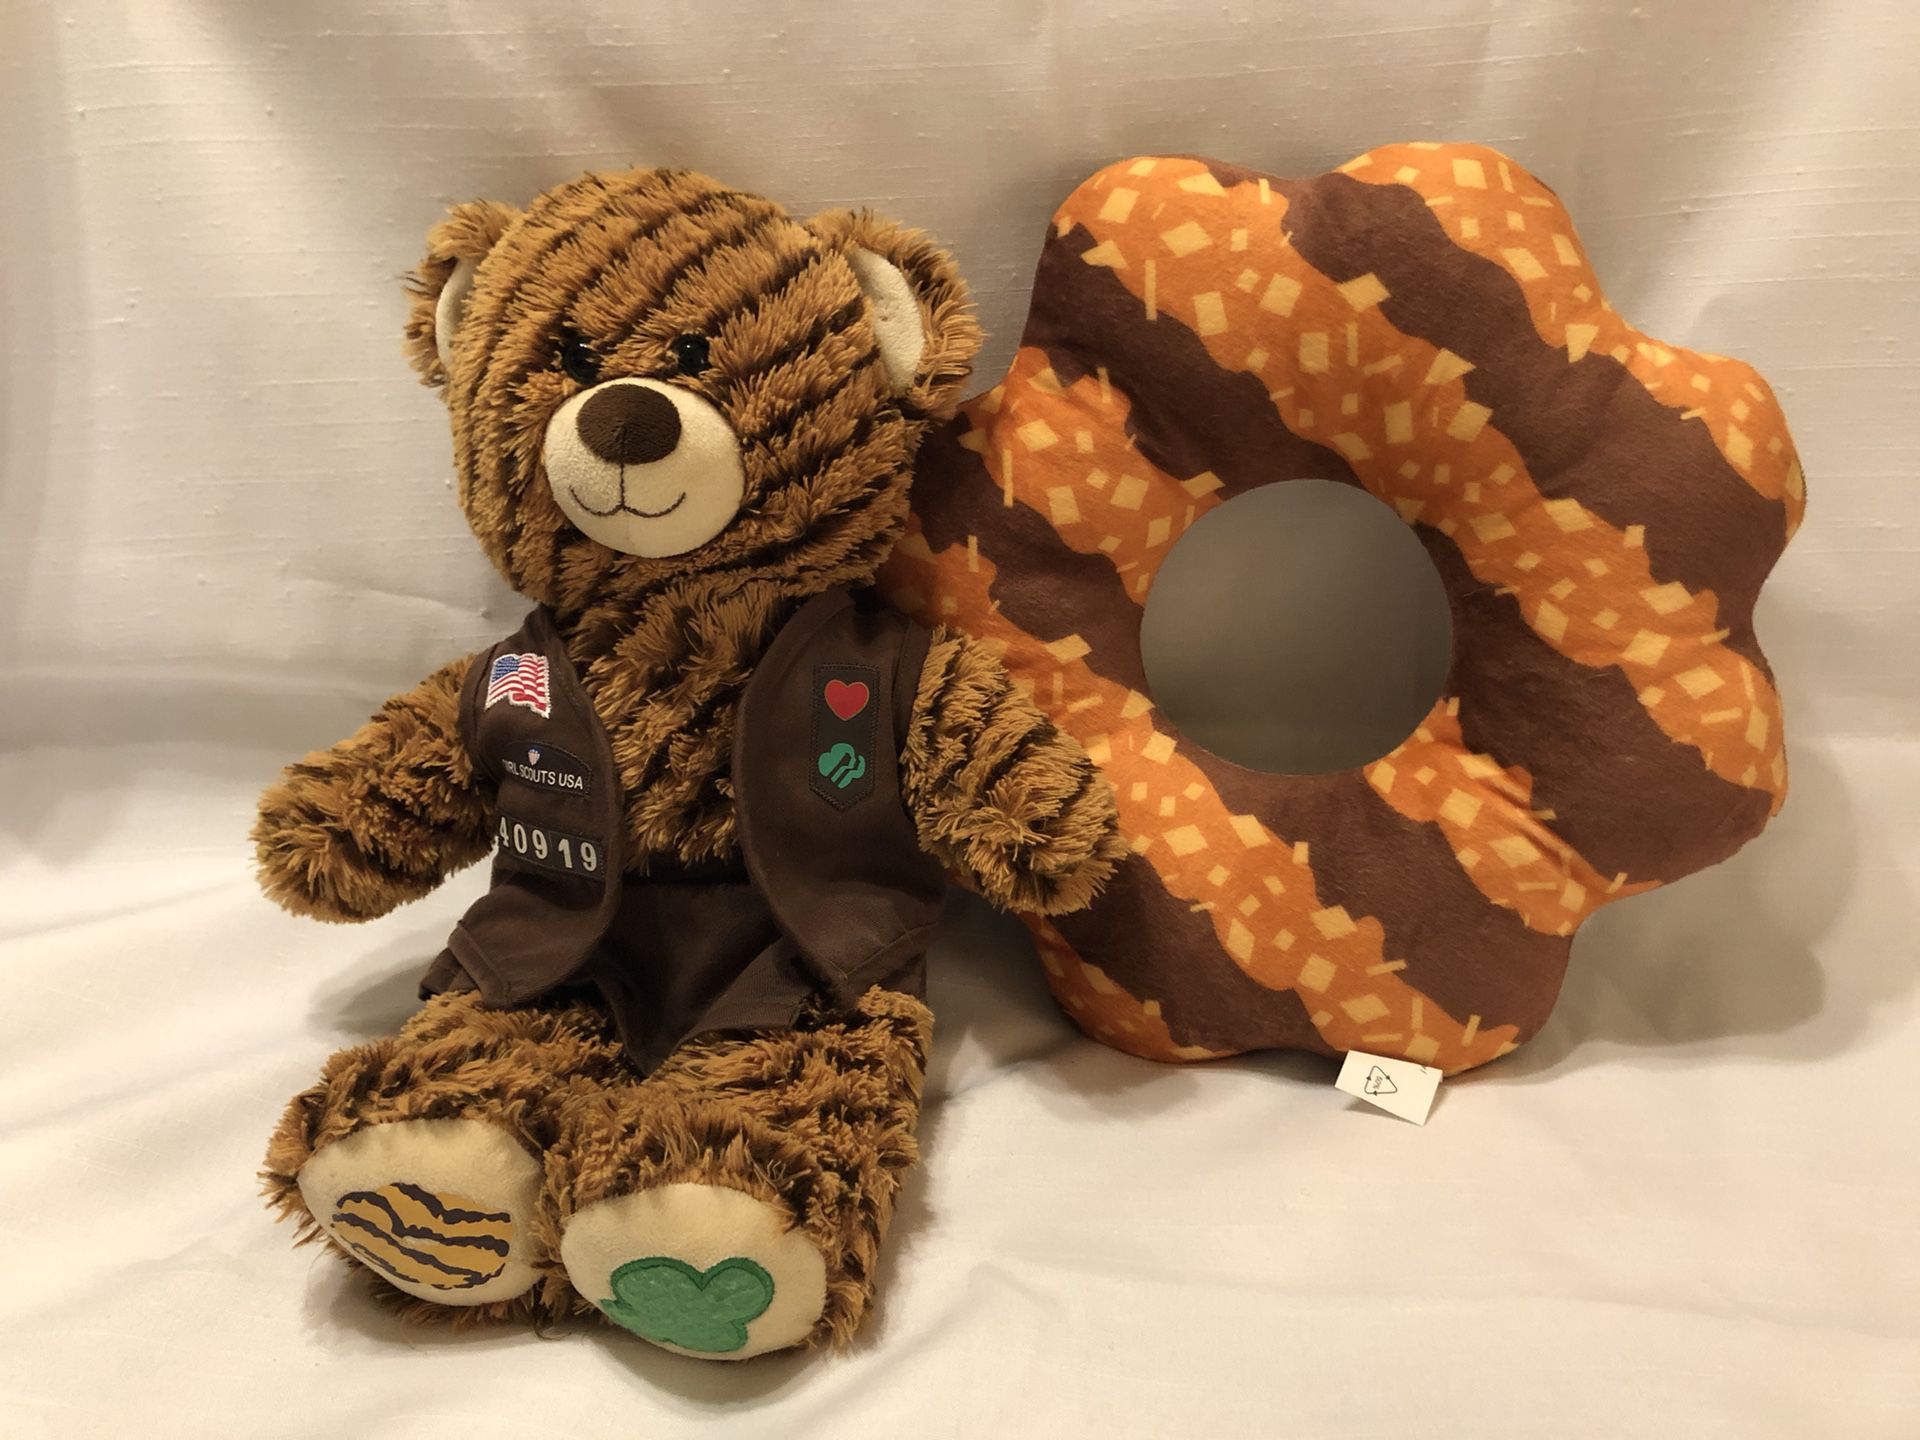 Girl Scouts Samoa Build A Bear Teddy